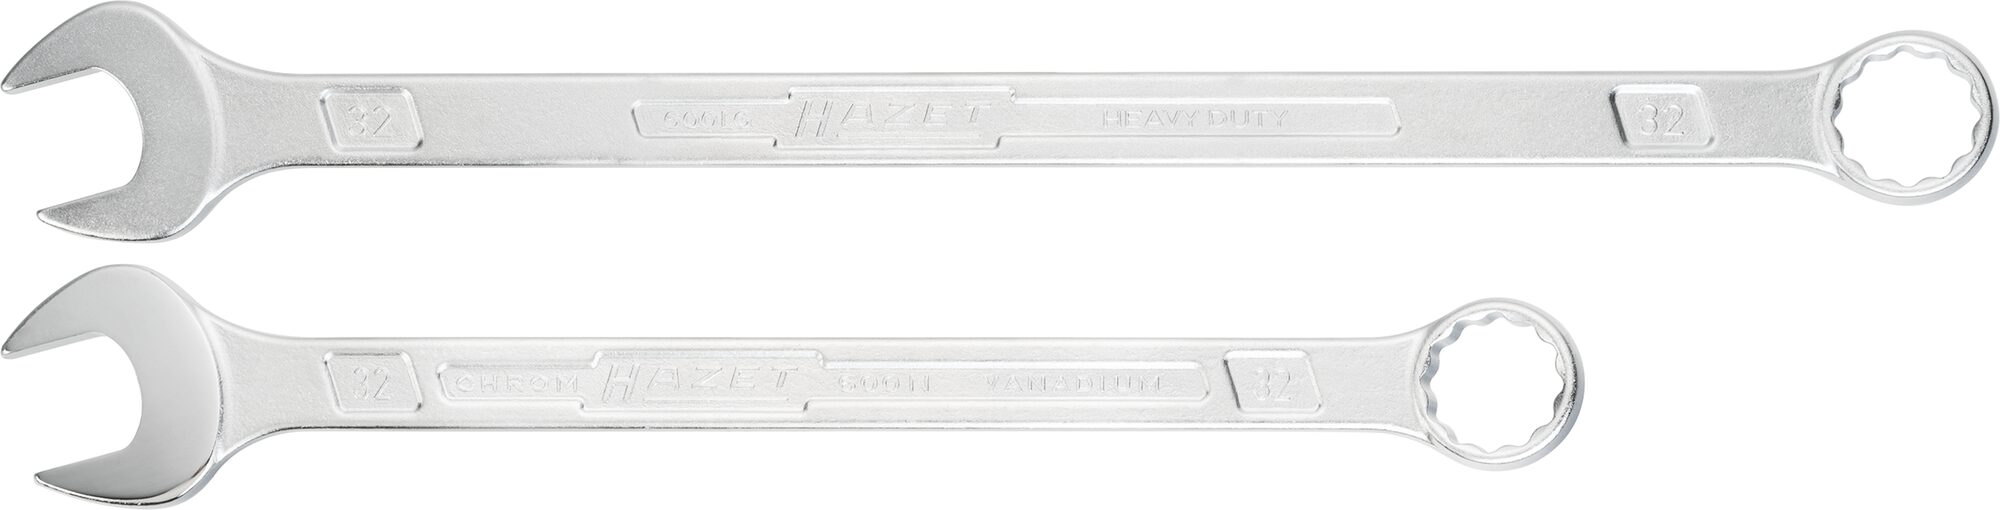 HAZET Ring-Maulschlüssel · extra lang · schlanke Bauform 600LG-24 · Außen Doppel-Sechskant-Tractionsprofil · 24 mm